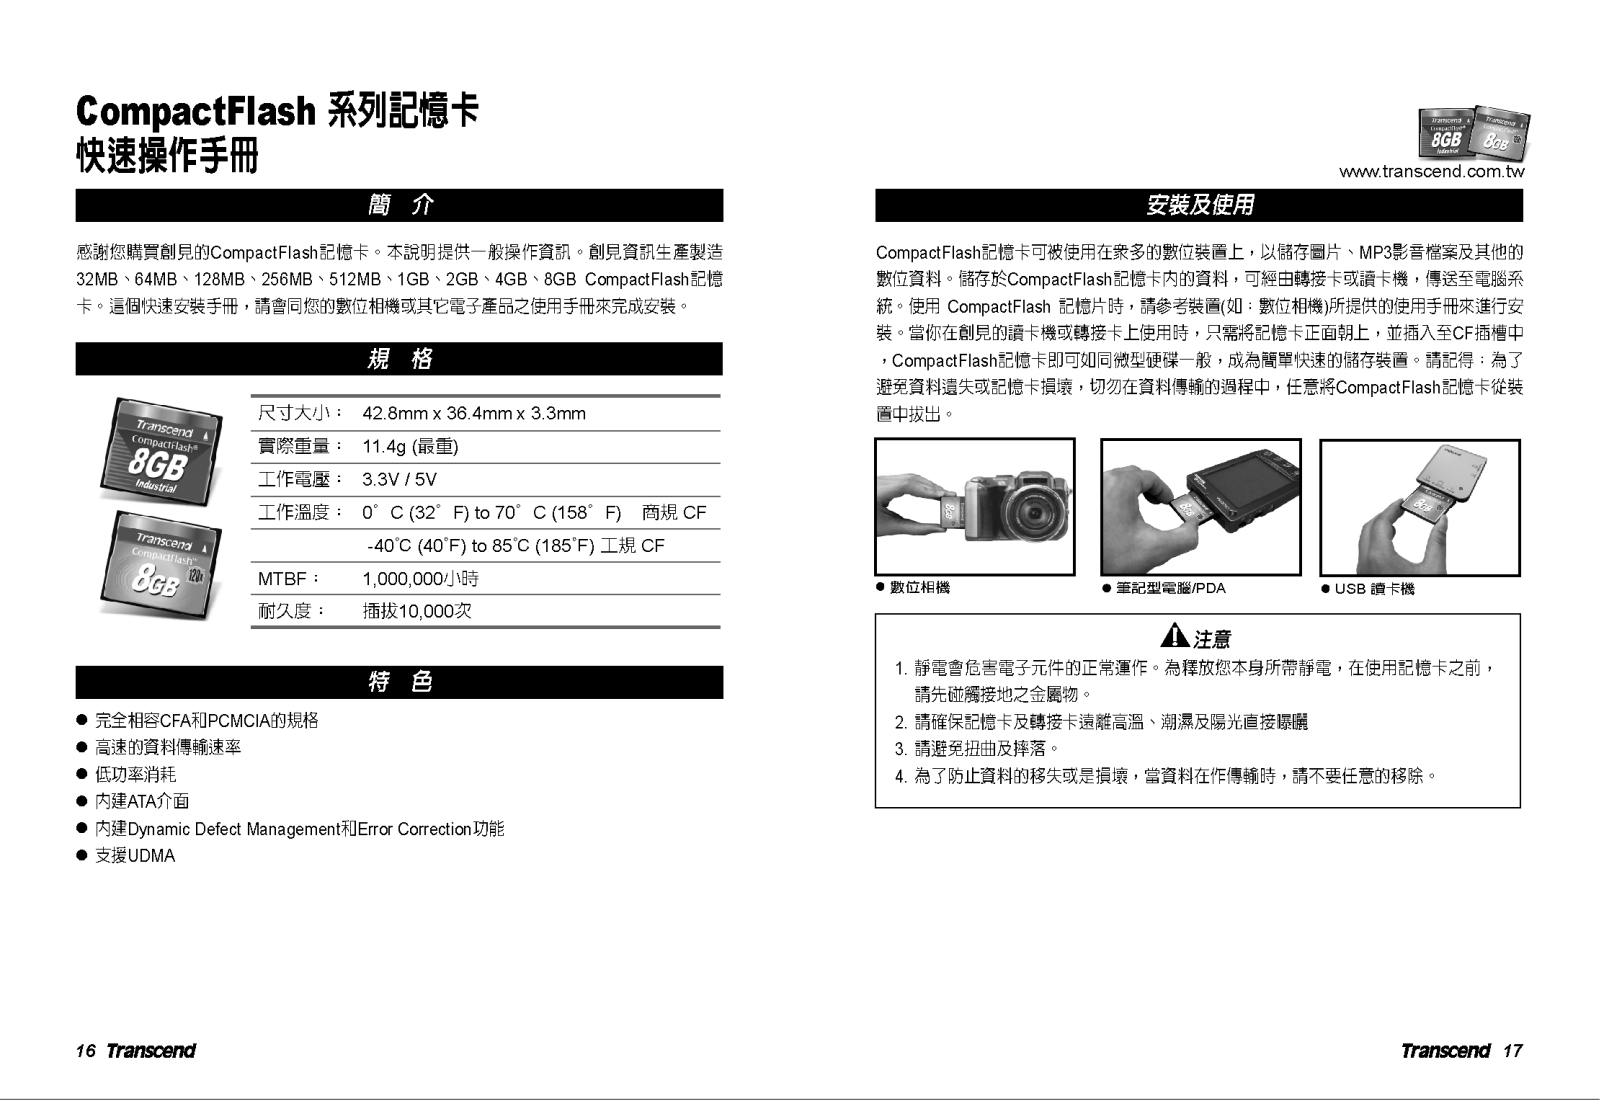 Transcend 80X COMPACT FLASH CARD, TS8GCF120, TS64MCF80, TS64MCF80-P, TS1GCF80-P Manual